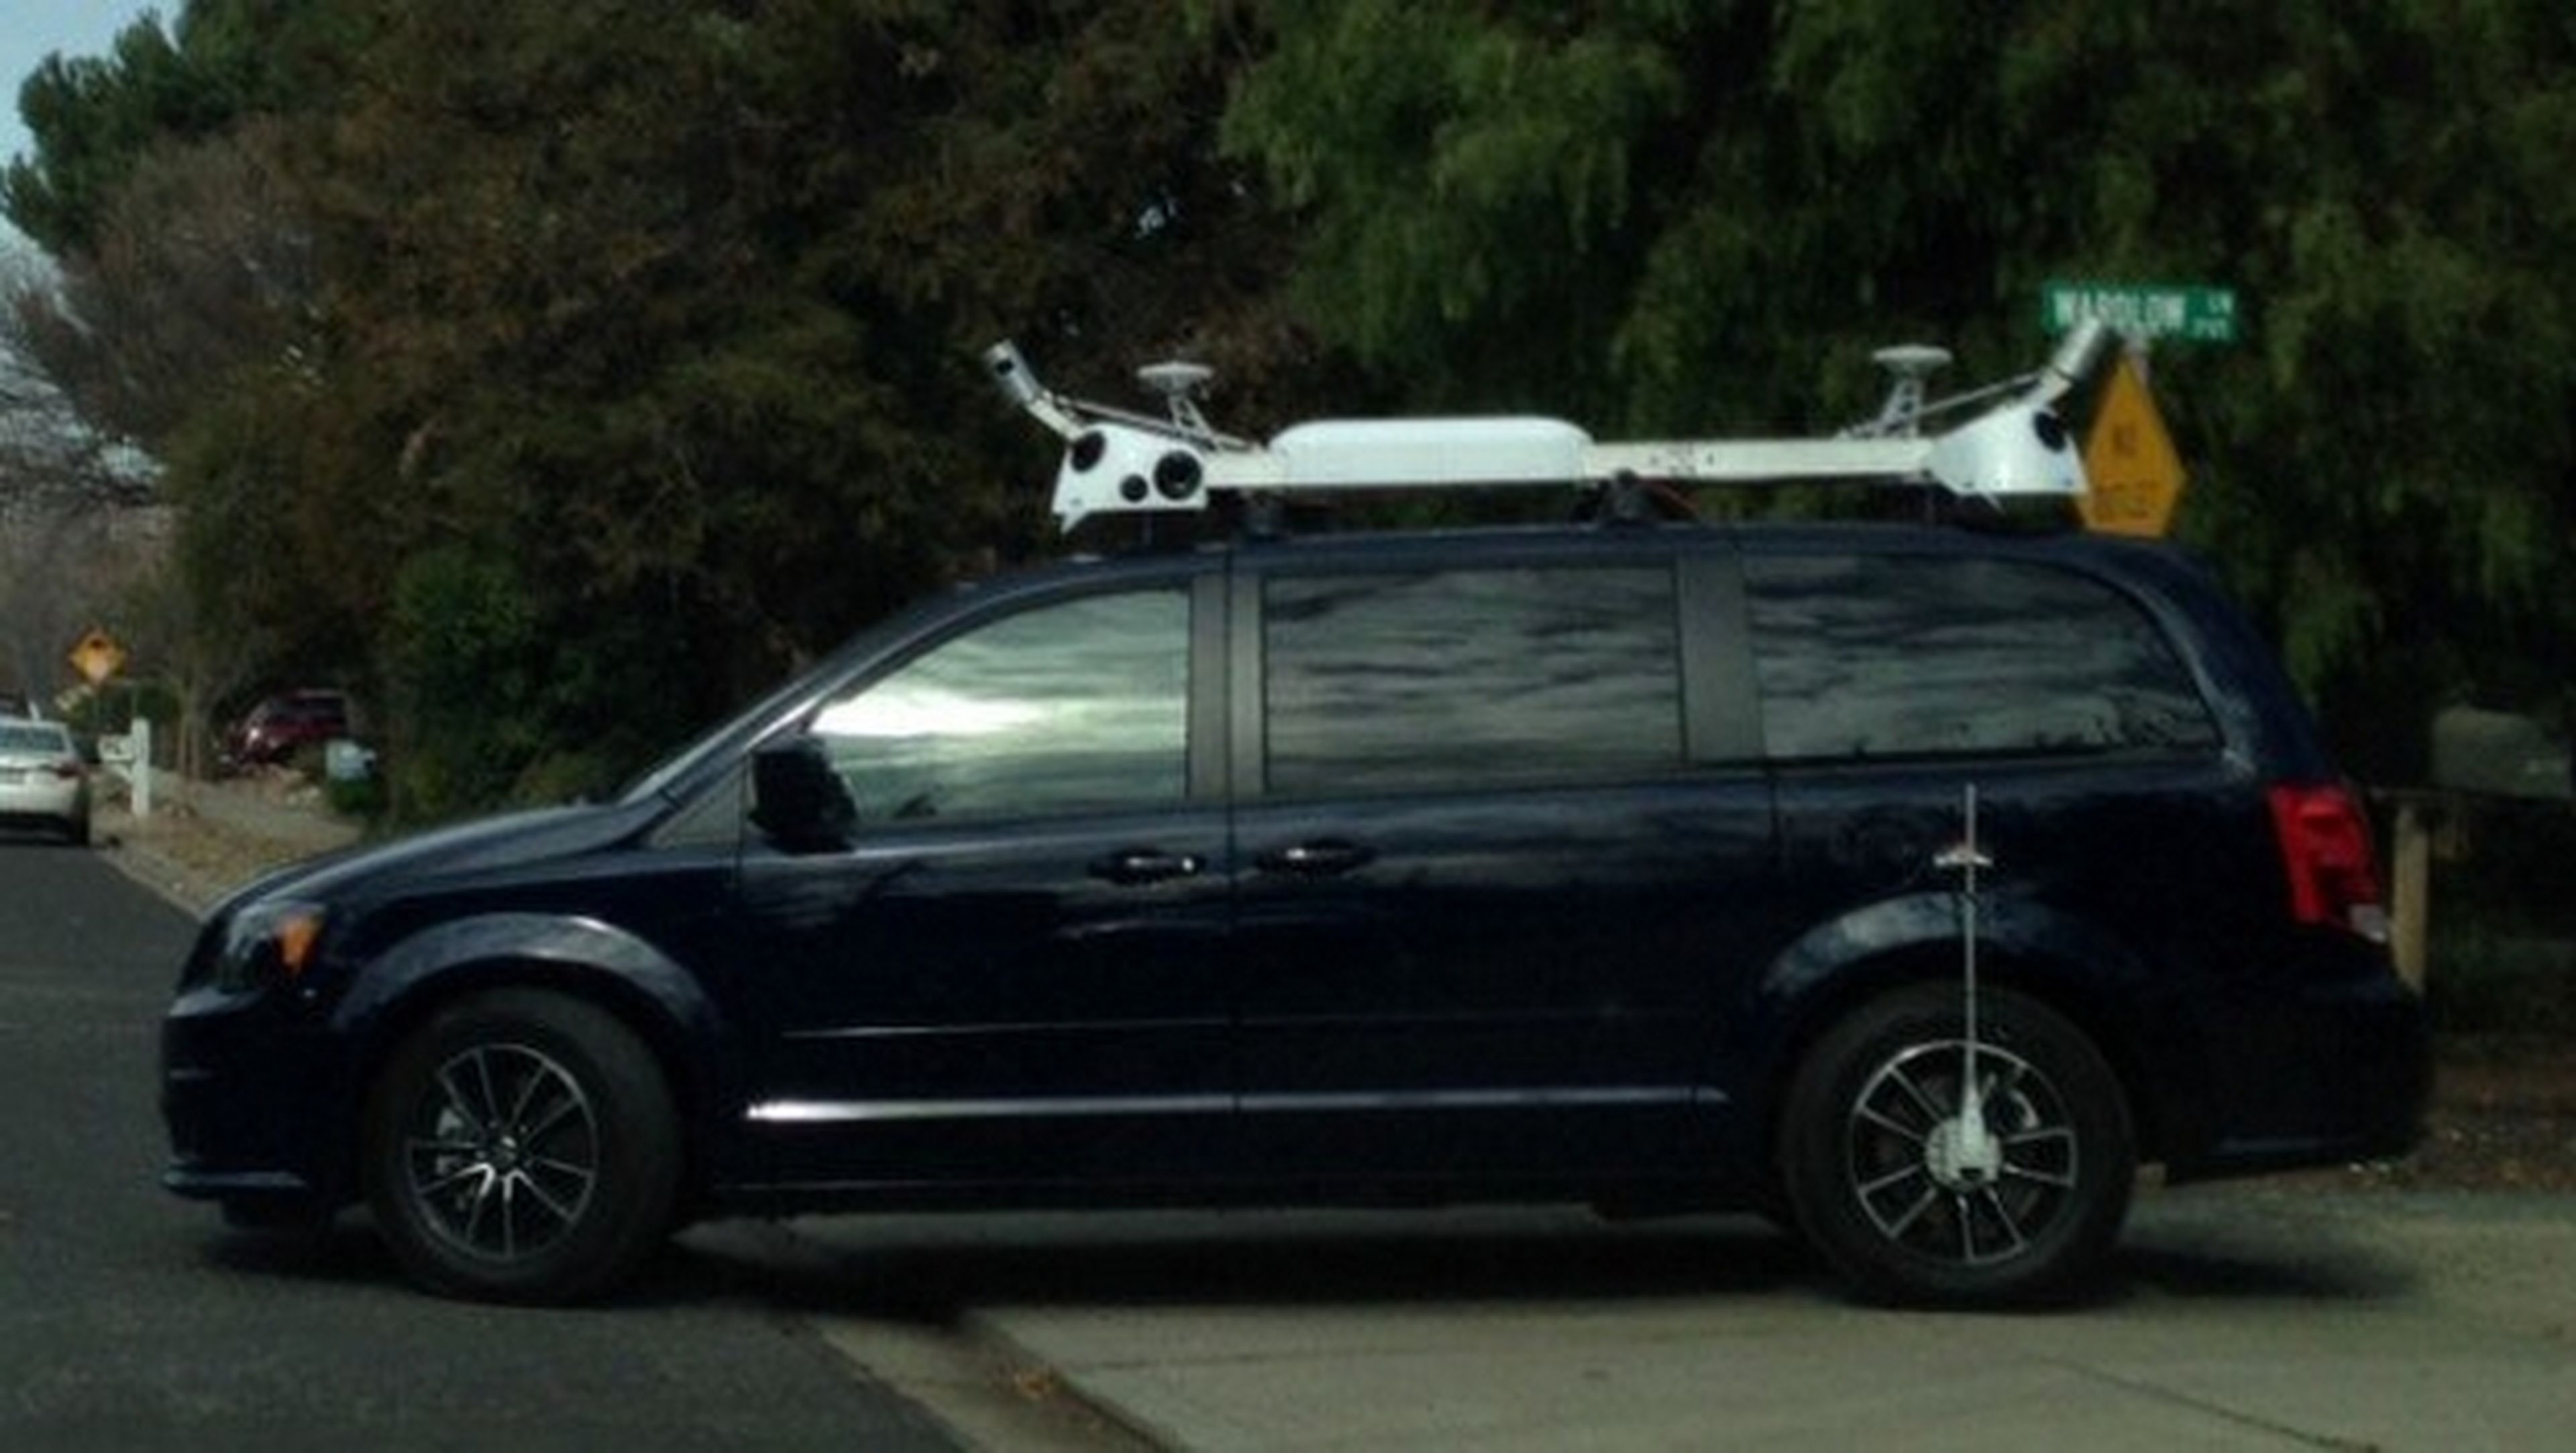 Misteriosos coches de Apple con cámaras recorren las calles: Podrían ser coches sin conductor o mapas al estilo Street View.